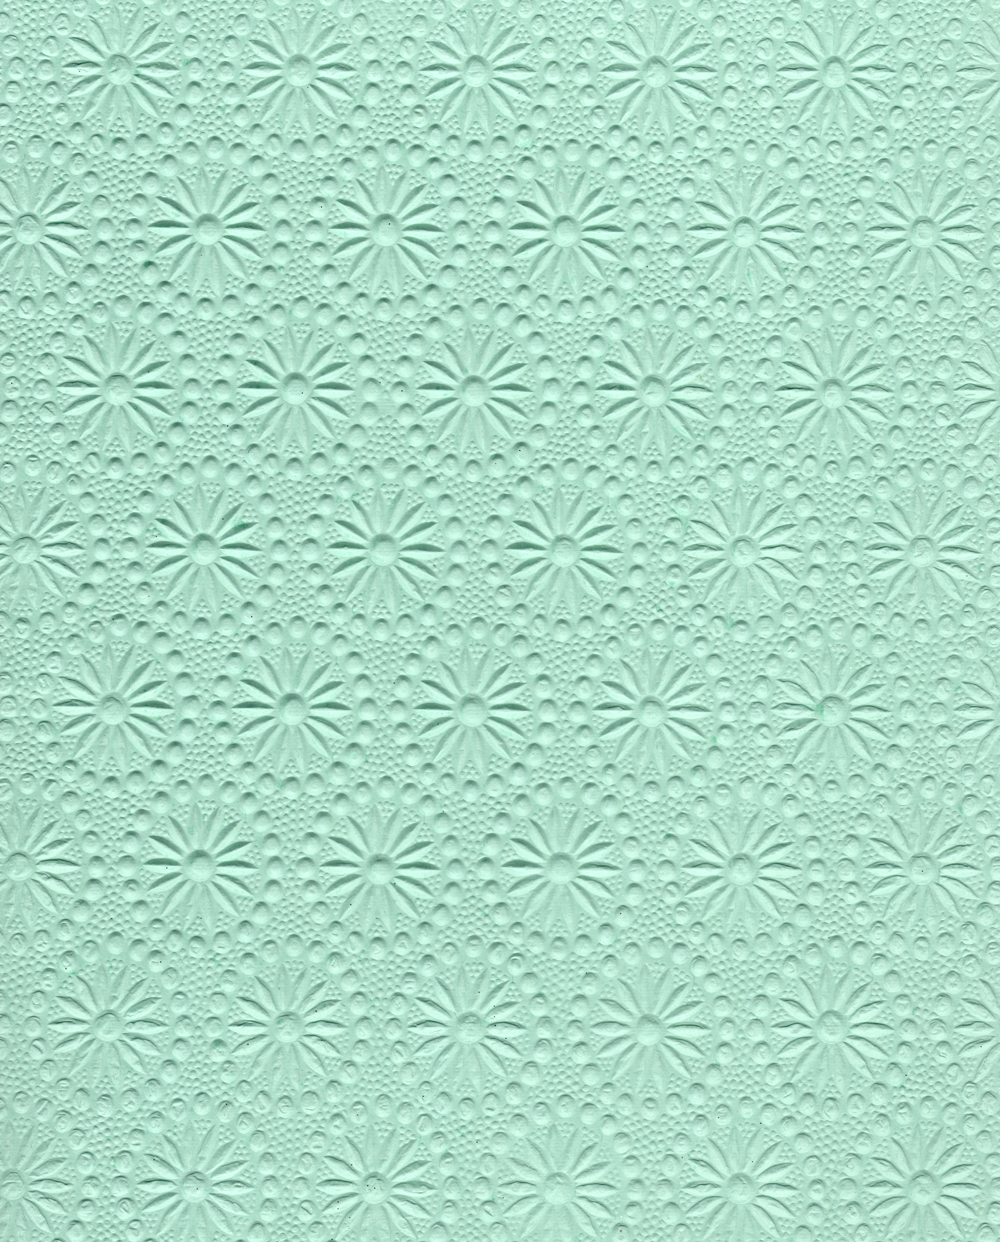 Pale blue pattern paper photo